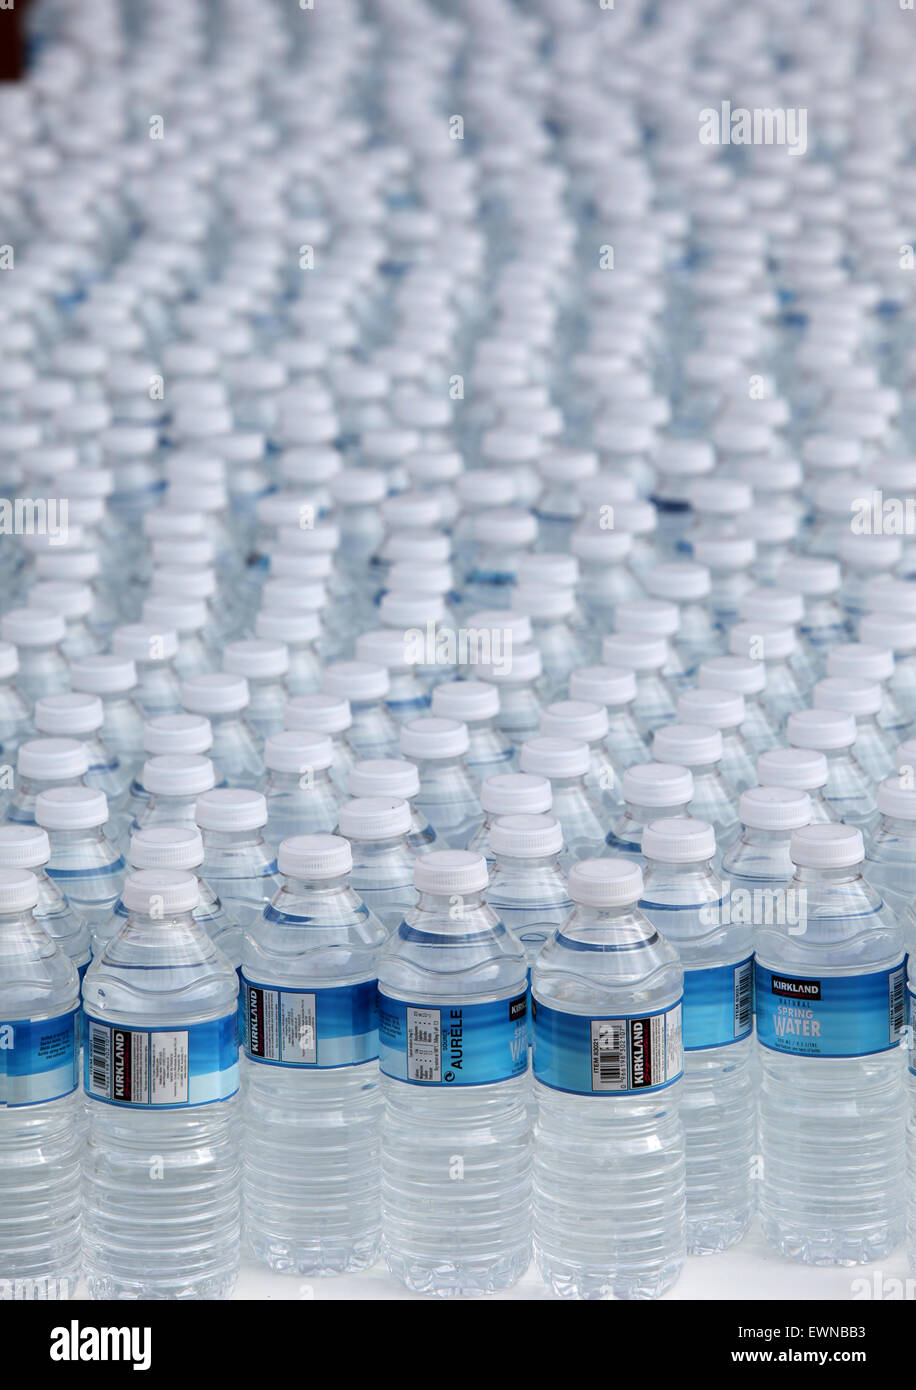 https://c8.alamy.com/comp/EWNBB3/rows-of-plastic-bottles-of-drinking-water-EWNBB3.jpg